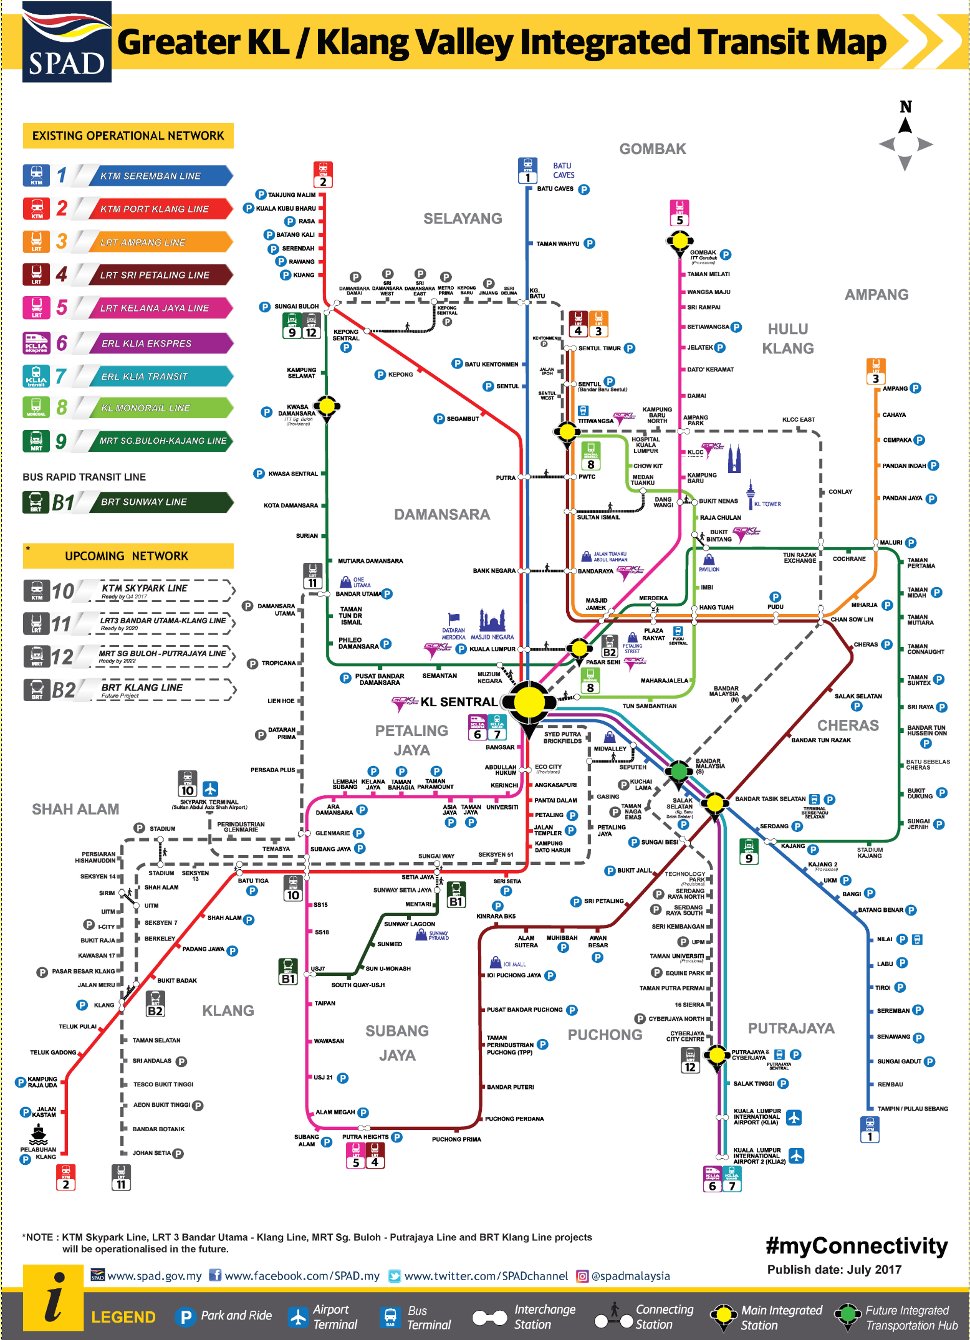 Klang Valley Integrated Transit Map